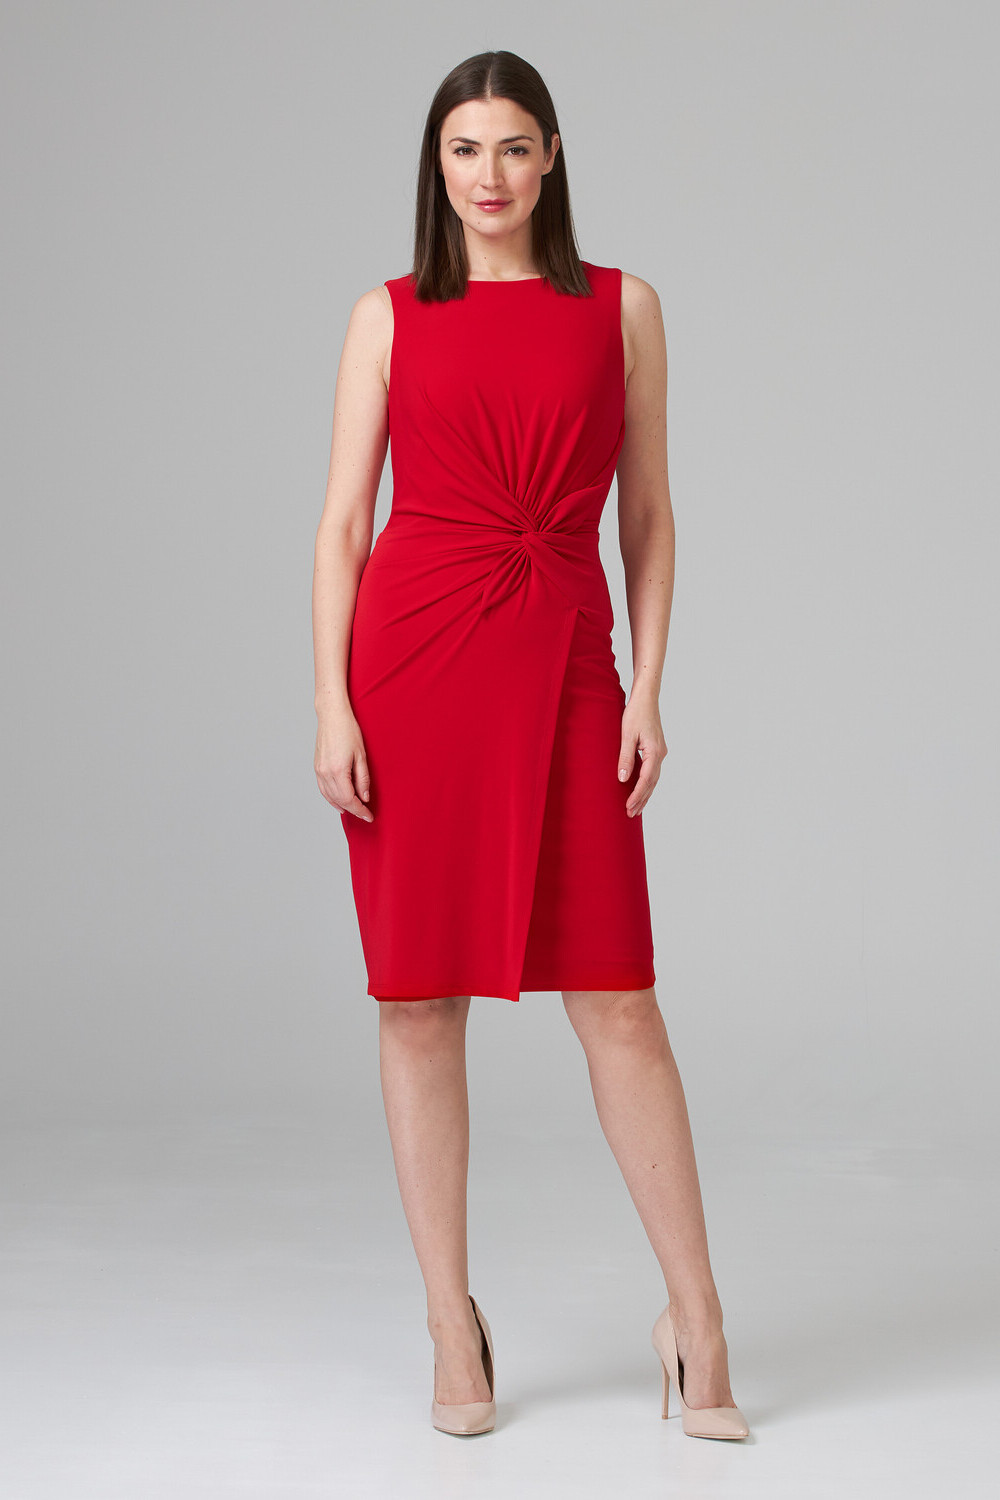 Joseph Ribkoff Dress Style 201476. Lipstick Red 173